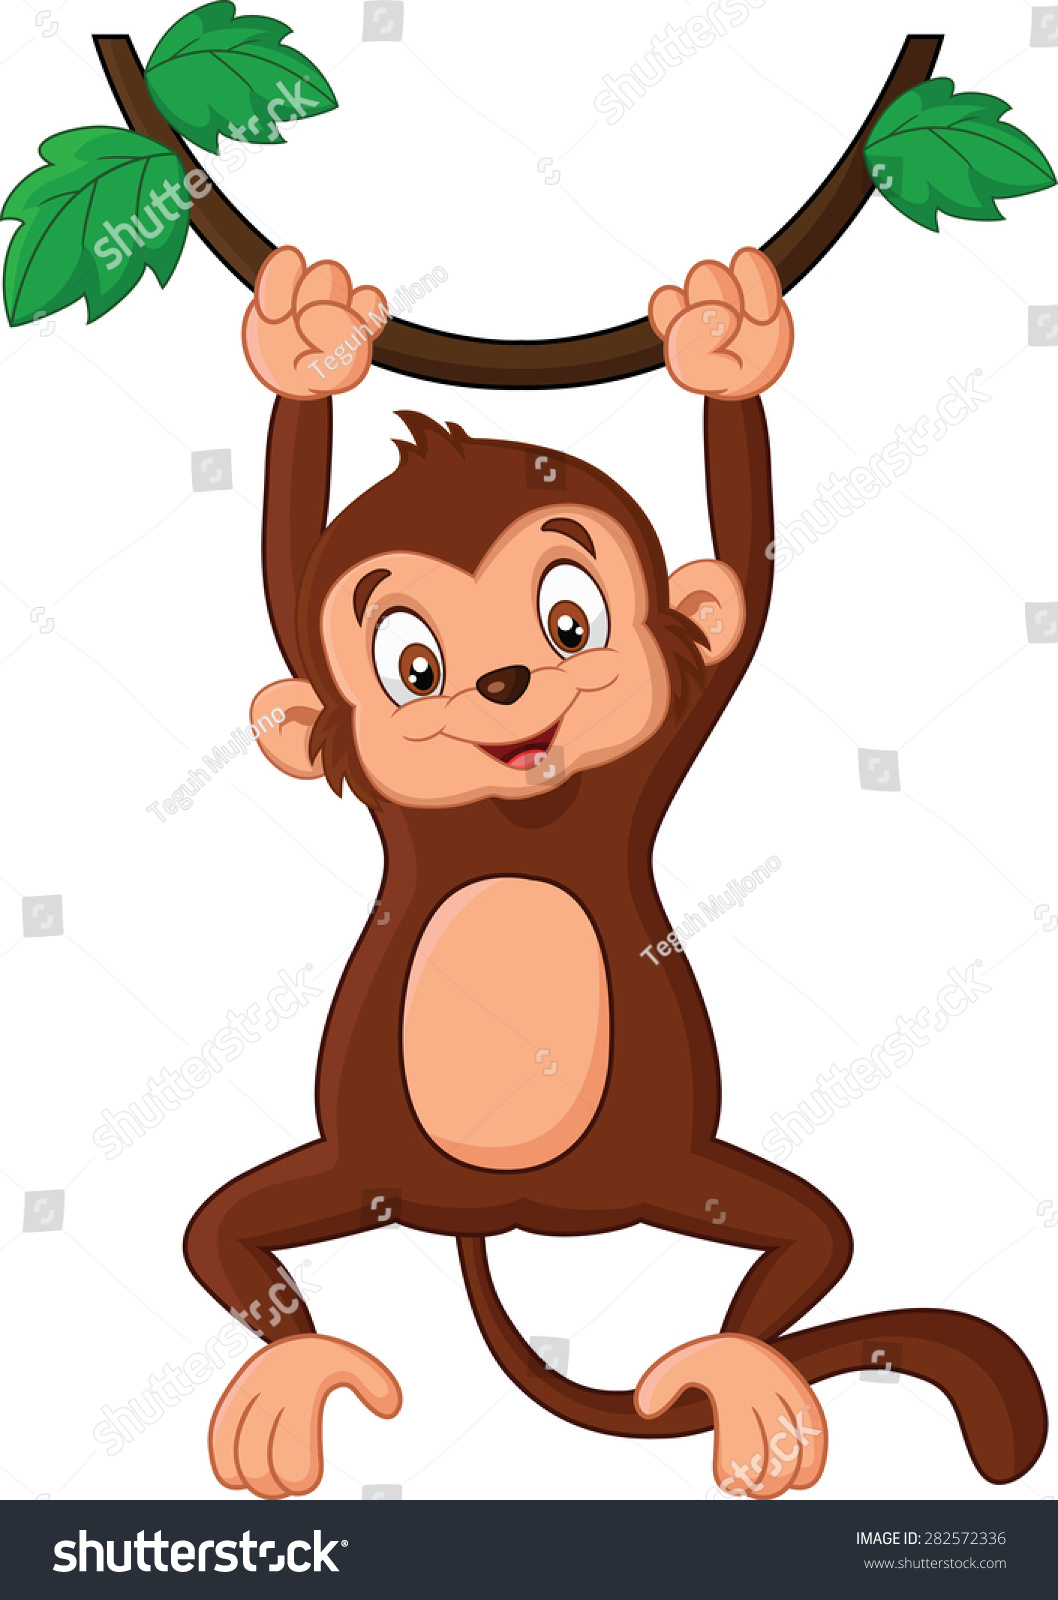 clipart monkey hanging tree - photo #34